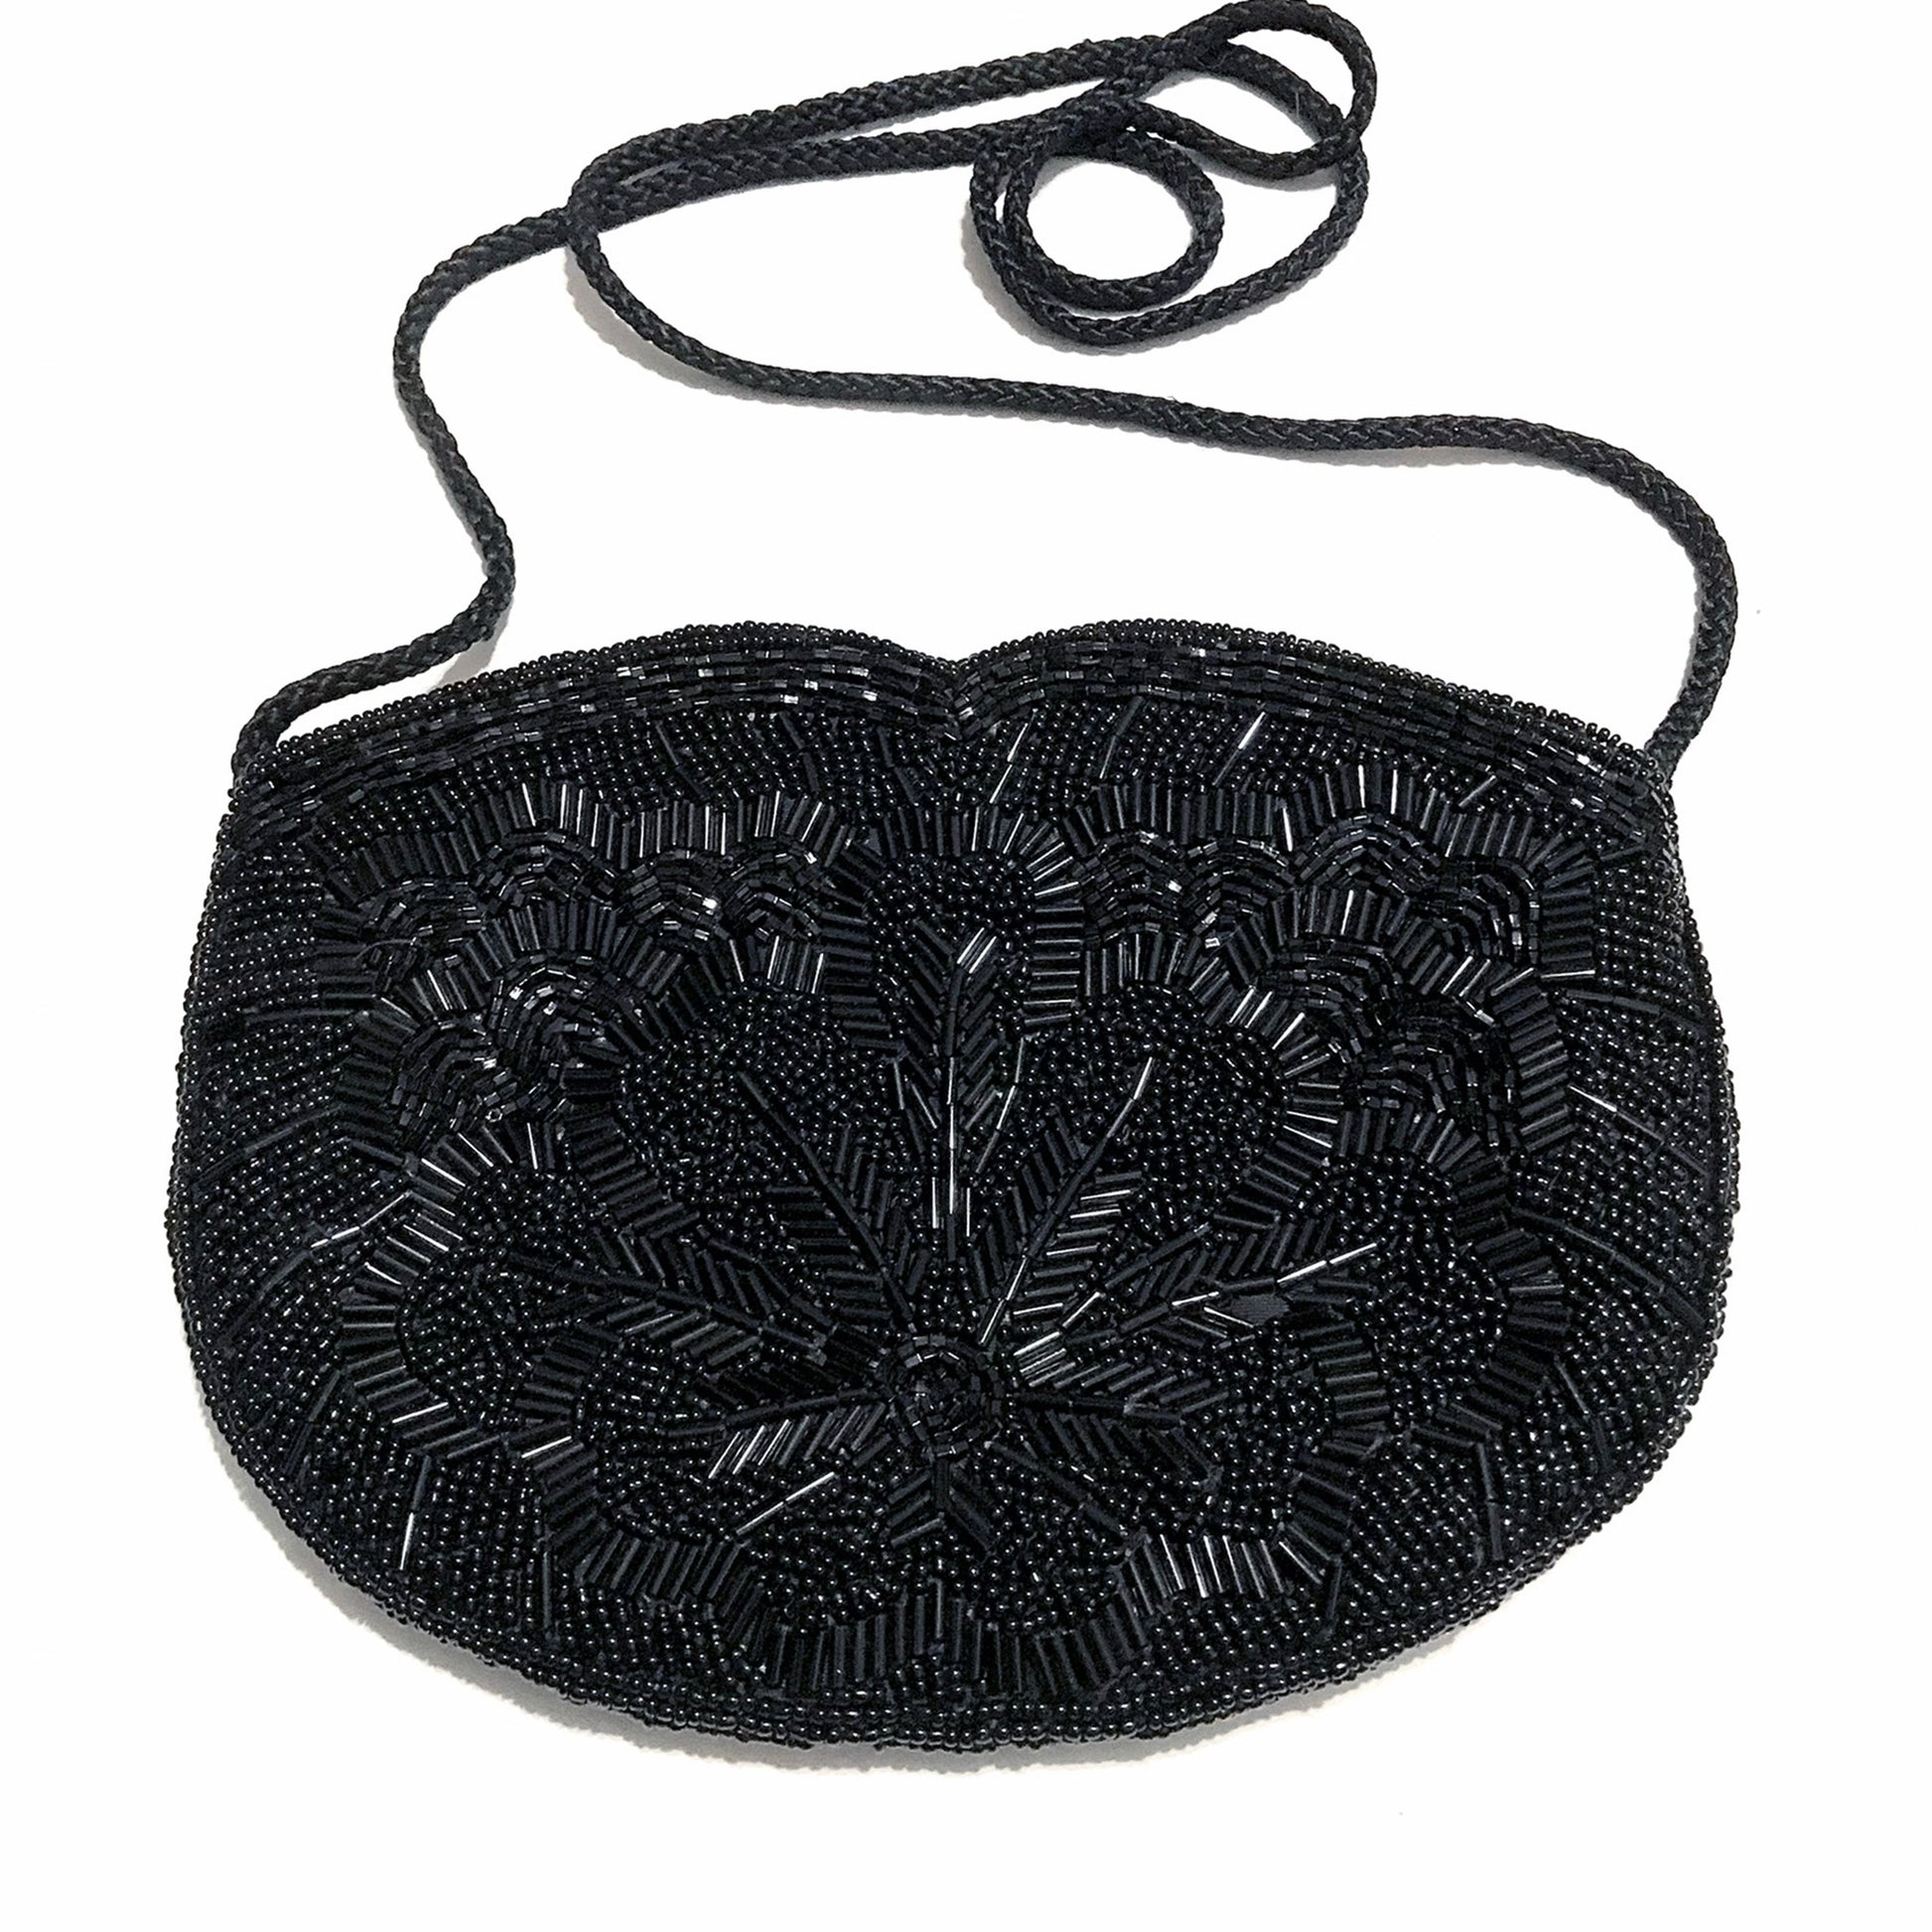 Ooh-La-La-Black-Heart-Shaped-Shoulder-Bag-with-Beads_-Sequins.-Shop-eBargainsAndDeals.com